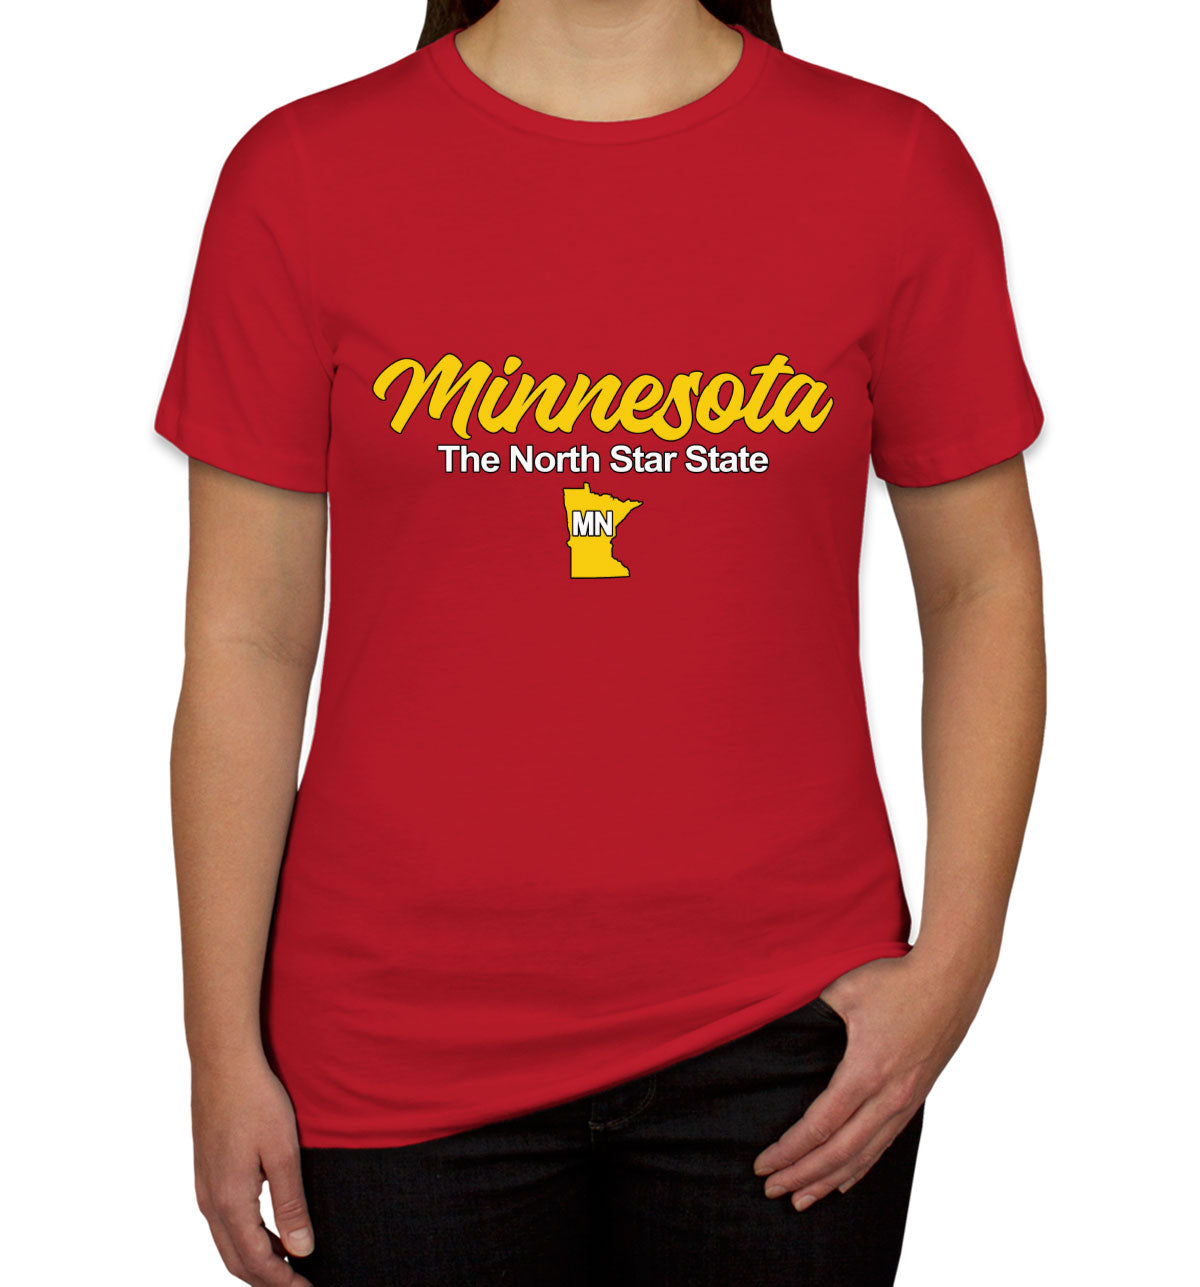 Minnesota The North Star State Women's T-shirt